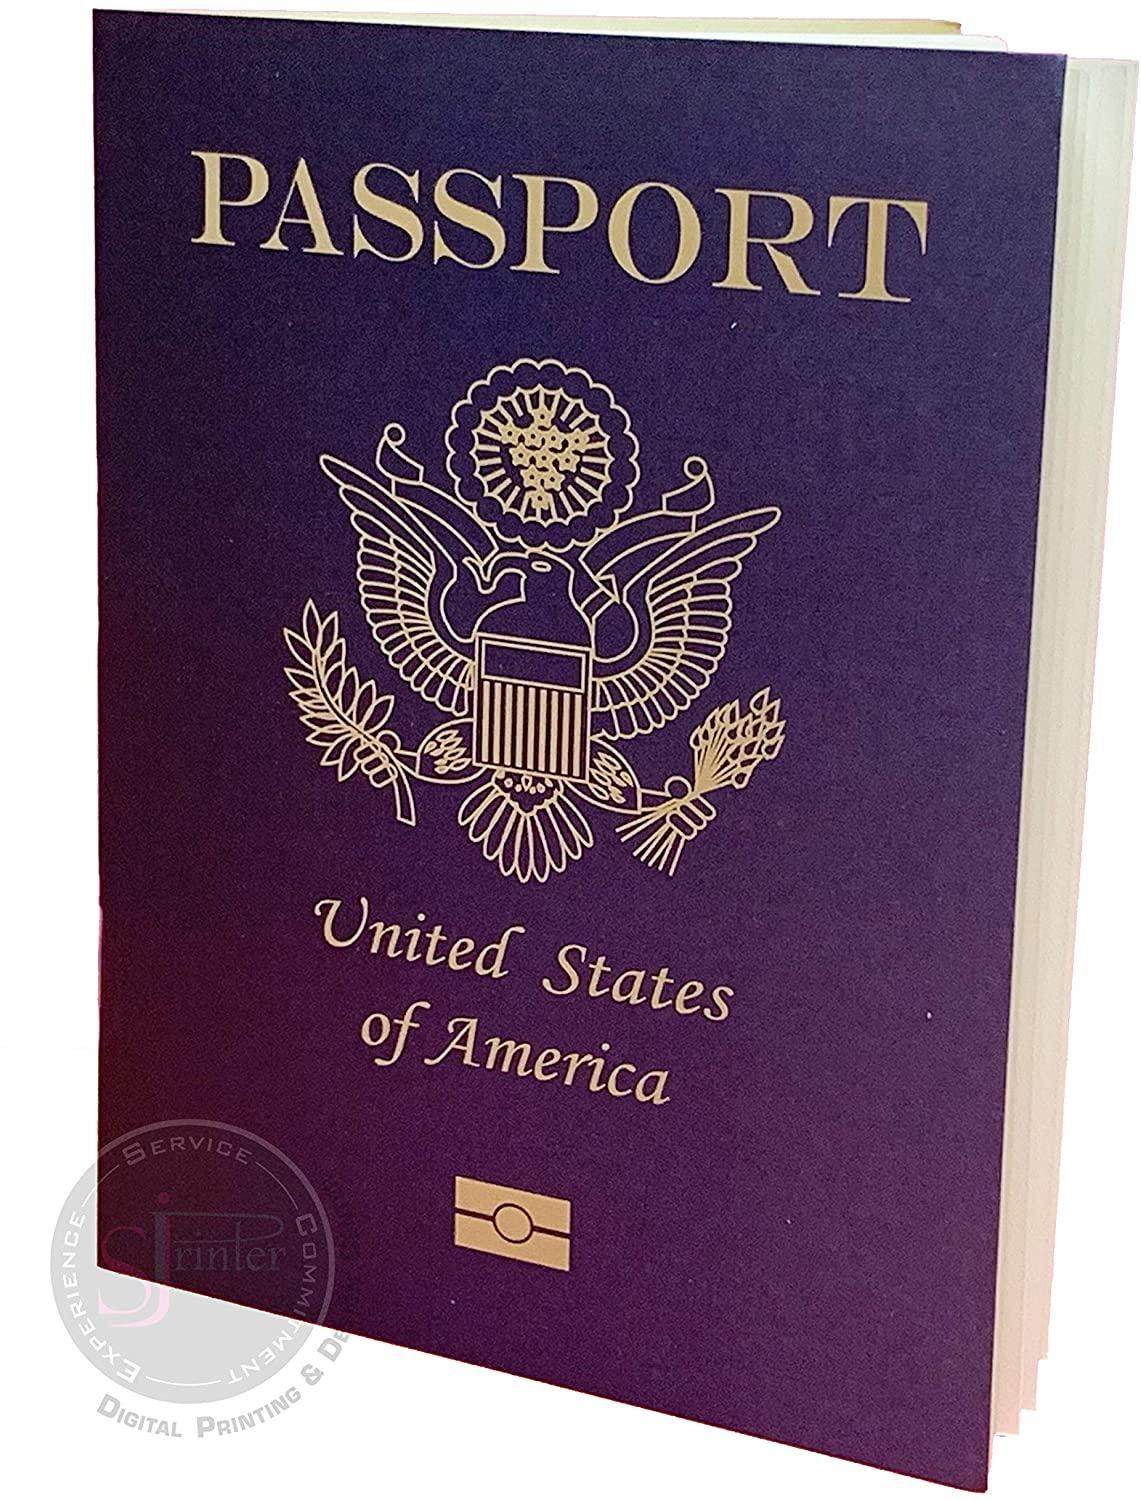 Pretend Passports for Kids - 18 Passports - SJPrinter 